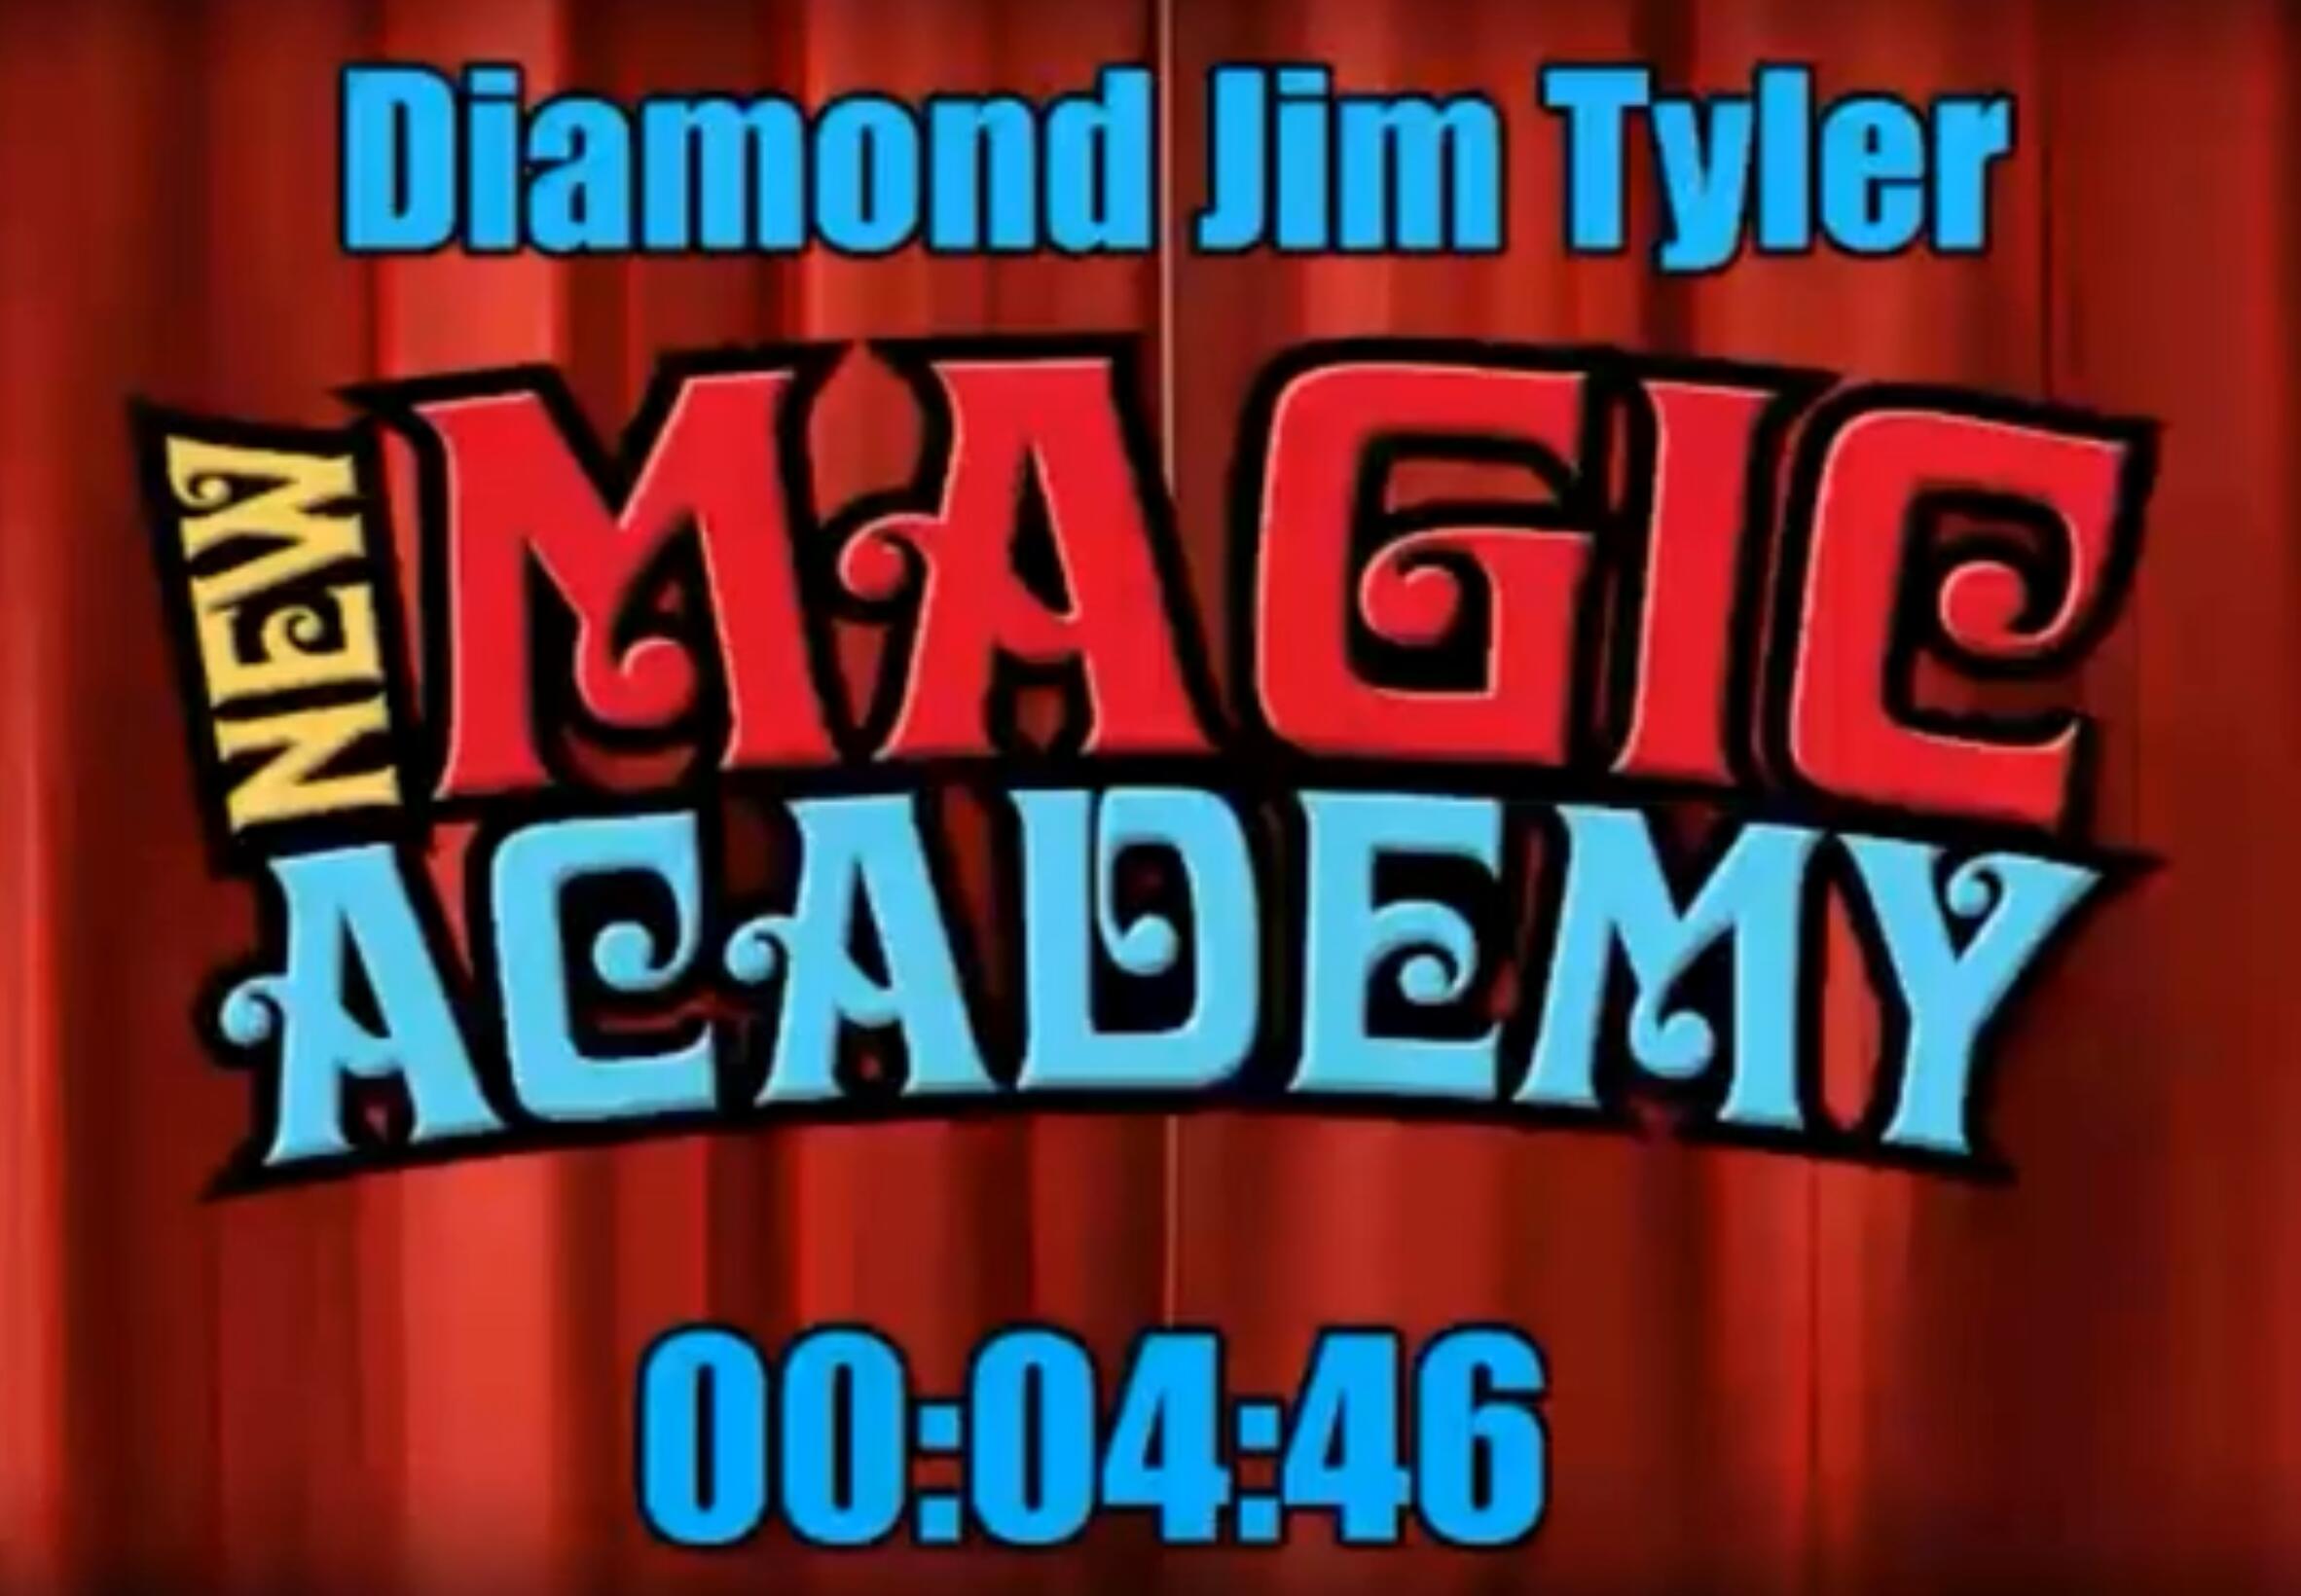 Diamond Jim Tyler - New Magic Academy Lecture